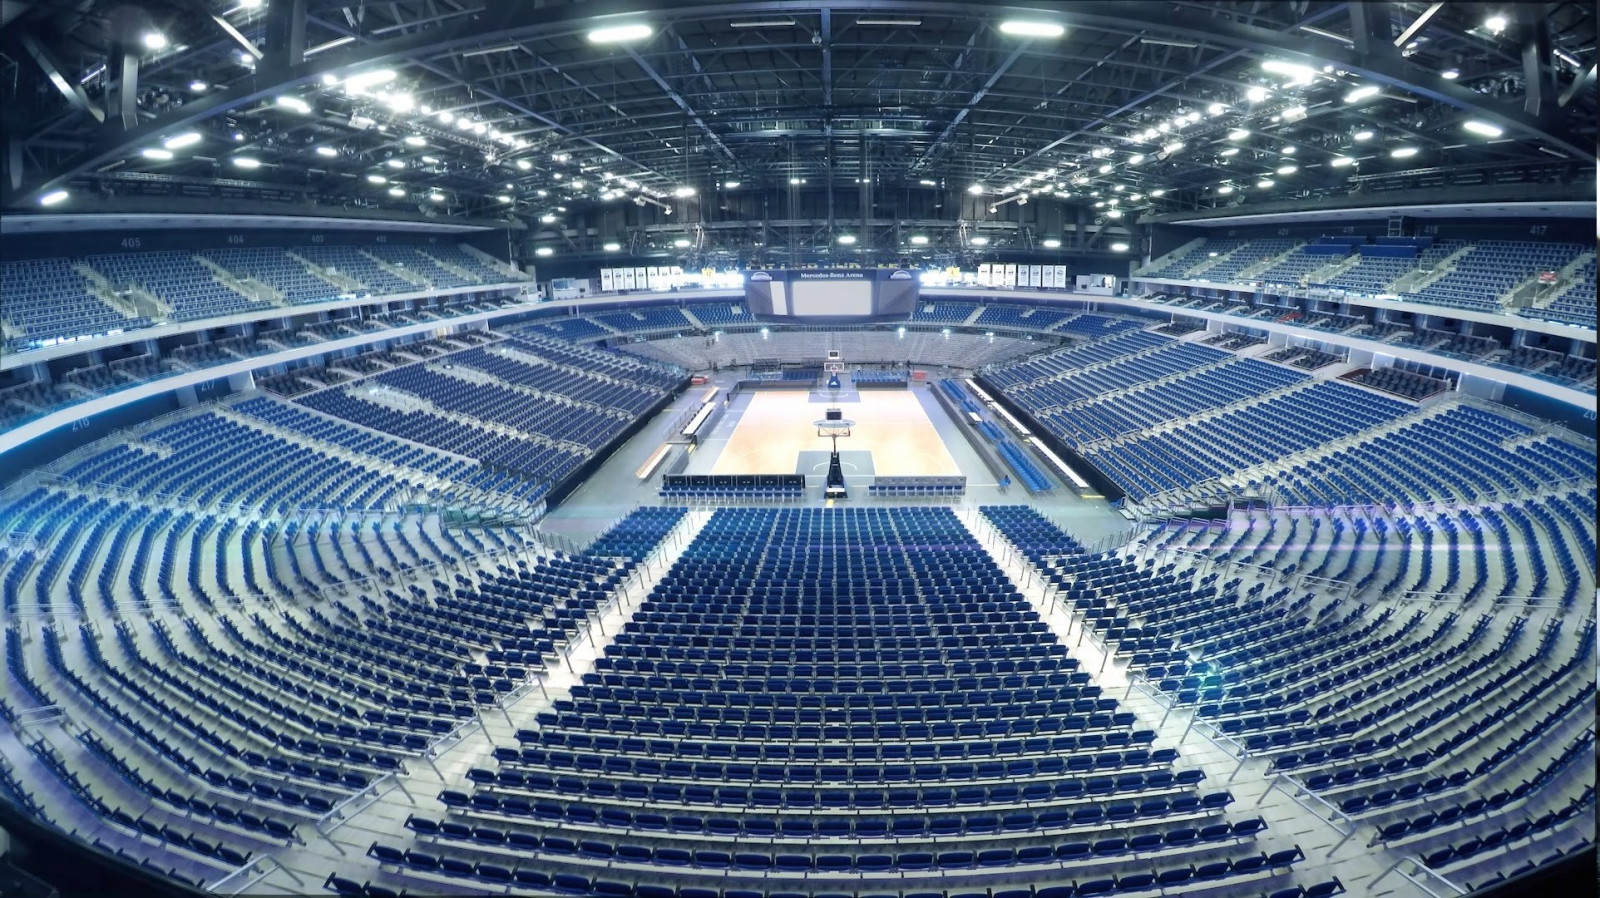 PGI 2018 пройдет на стадионе "Мерседес-Бенц-Арена" в Берлине